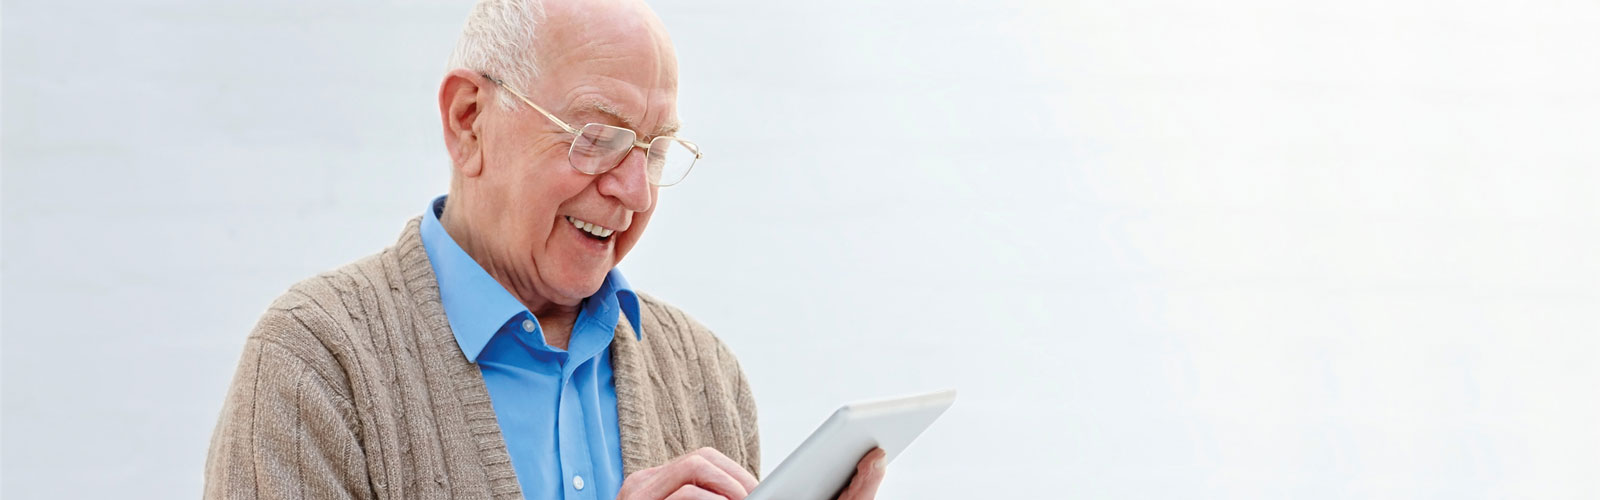 An older man using a tablet